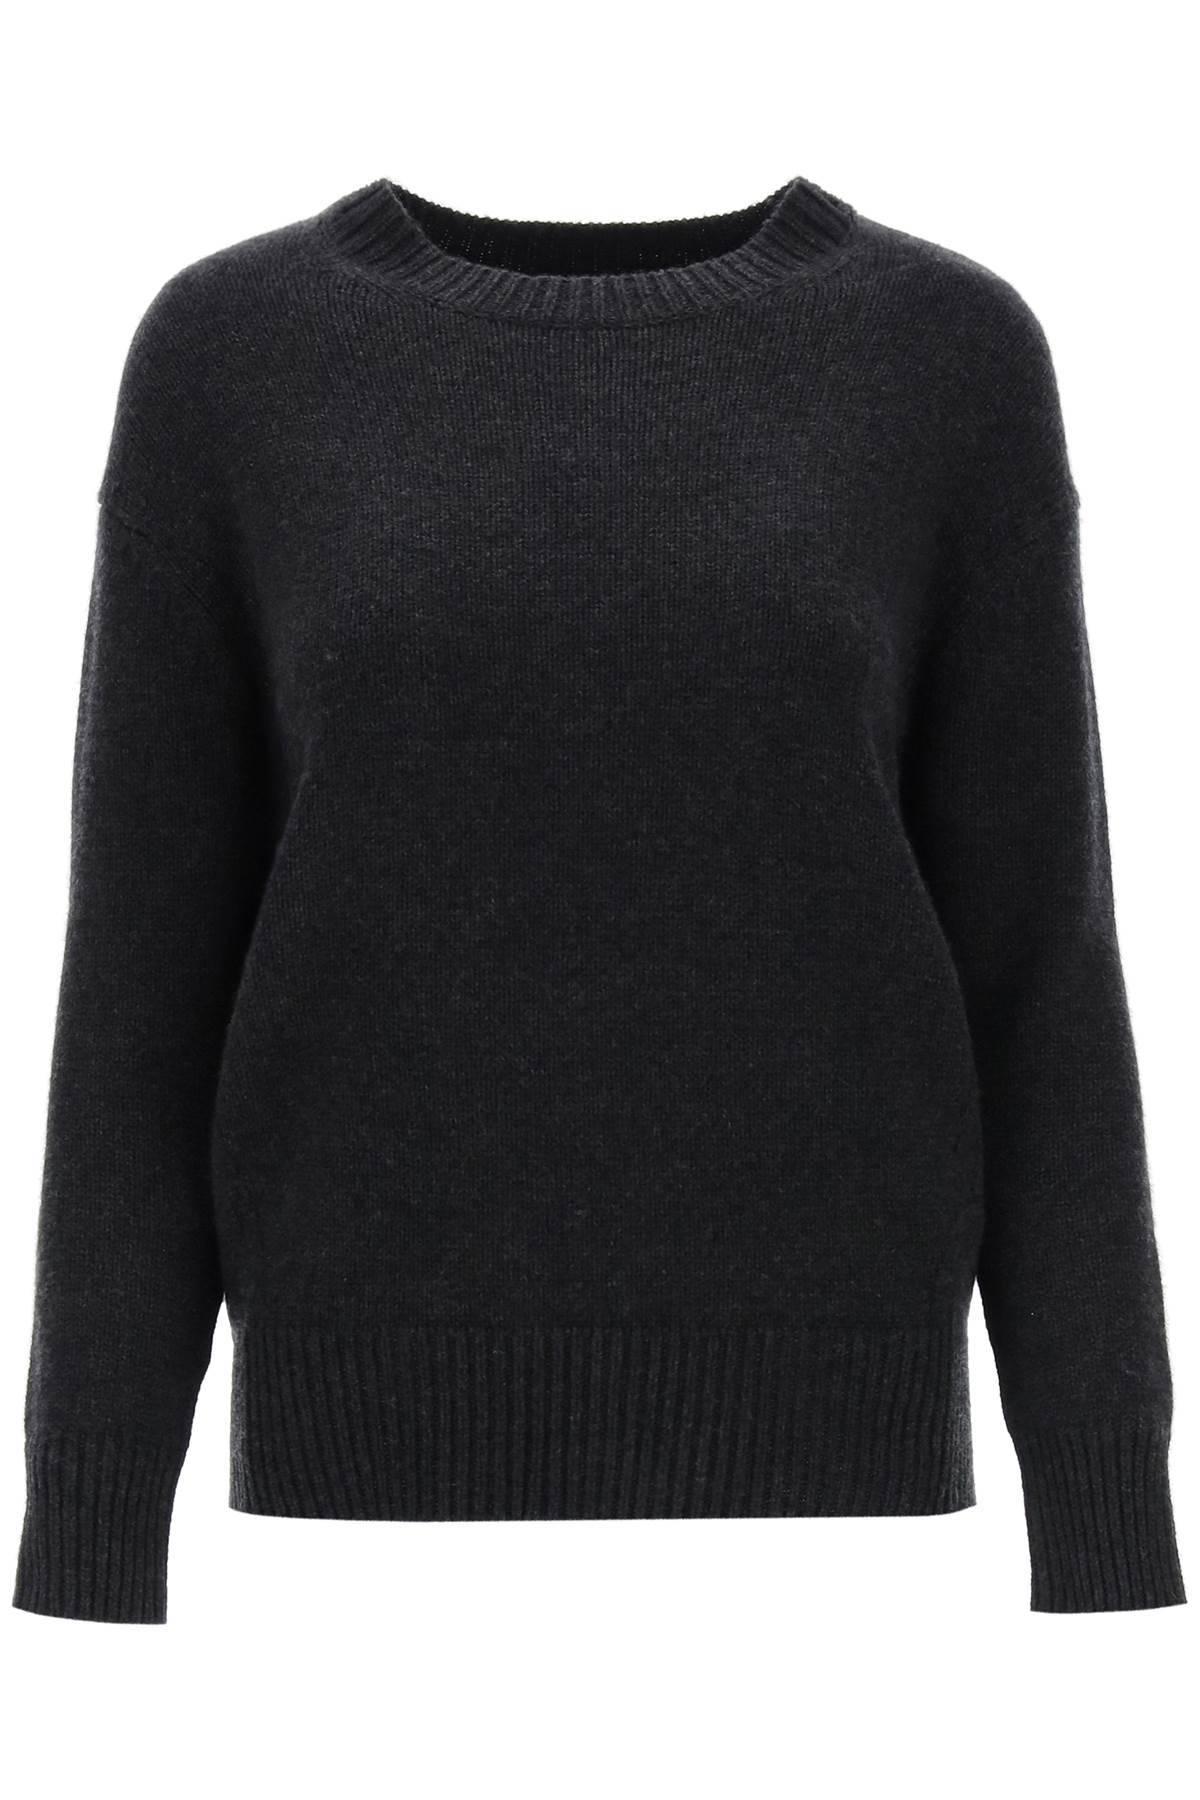 's Max Mara 'irlanda' Crew-neck Sweater In Wool And Cashmere In Grey